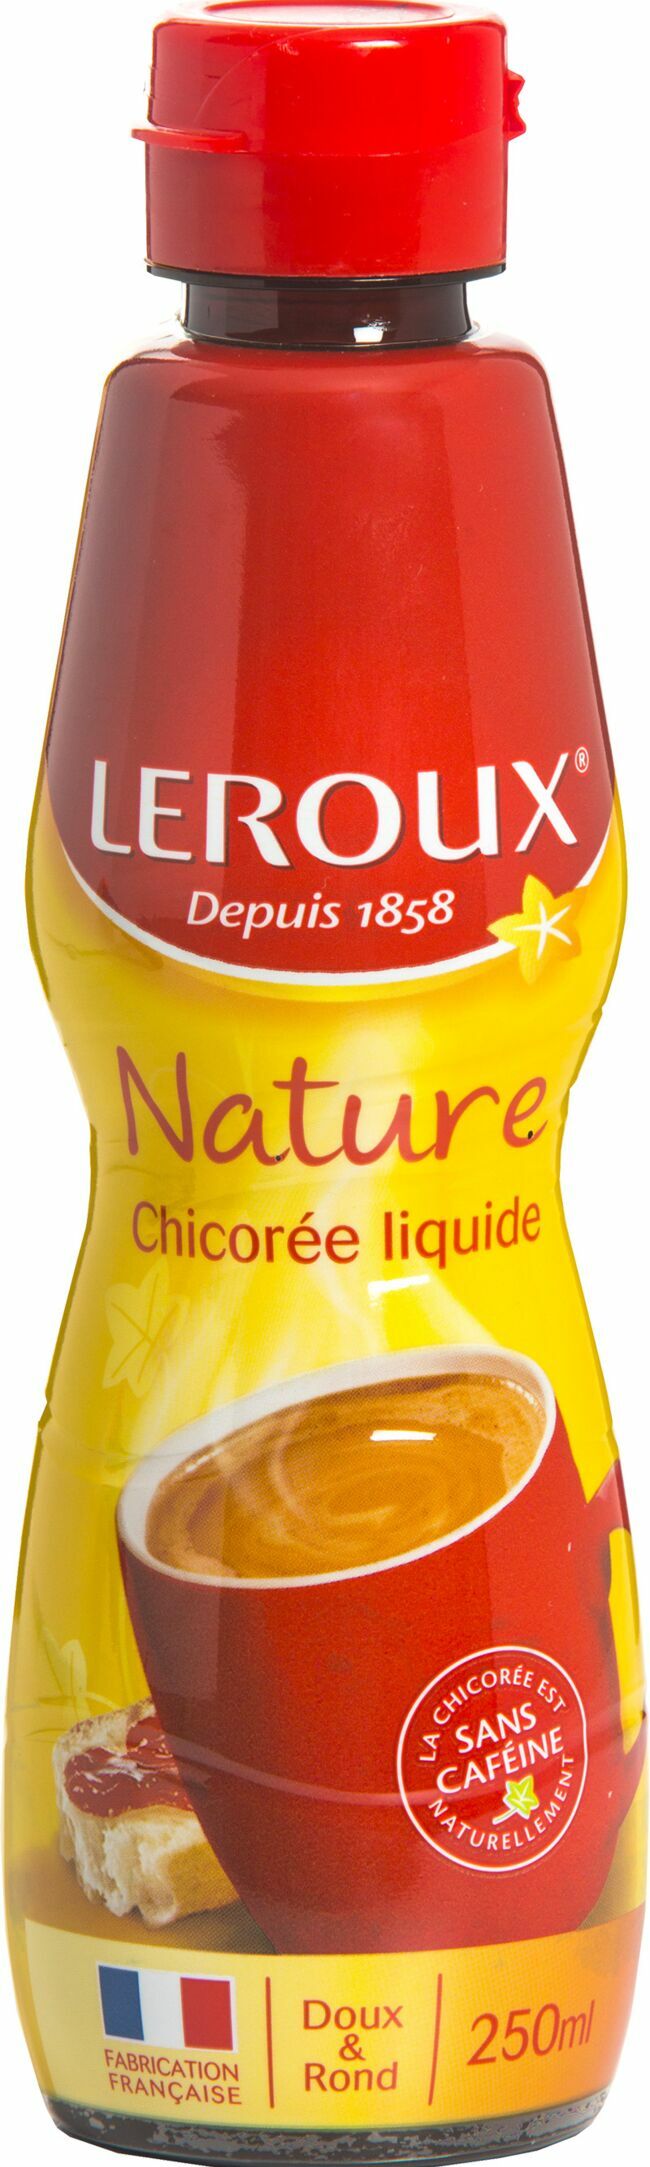 Chicorée liquide, 3,35 € (250 ml)